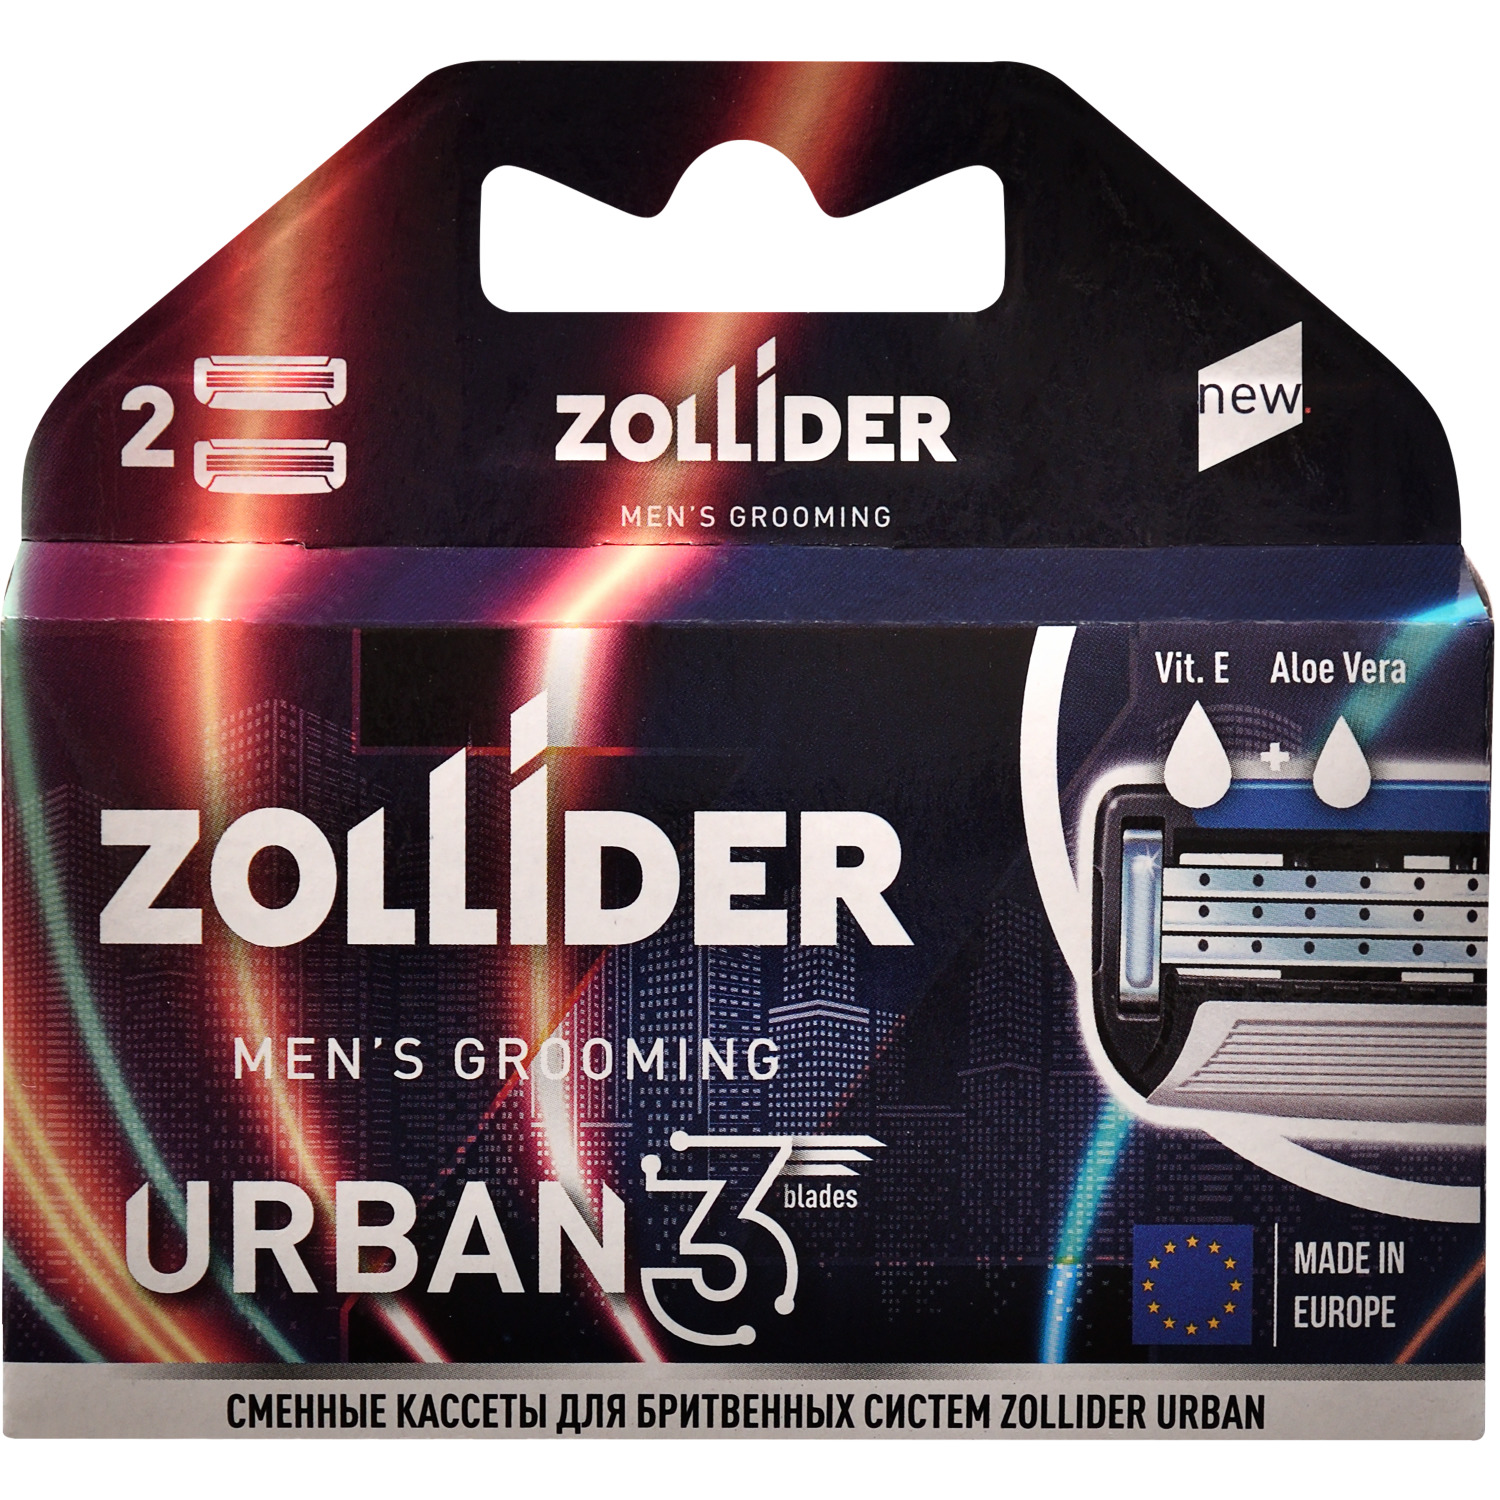 Сменные кассеты Zollider URBAN 3 blades 3 лезвия 2 шт сменные кассеты gillette venus smooth 6 шт